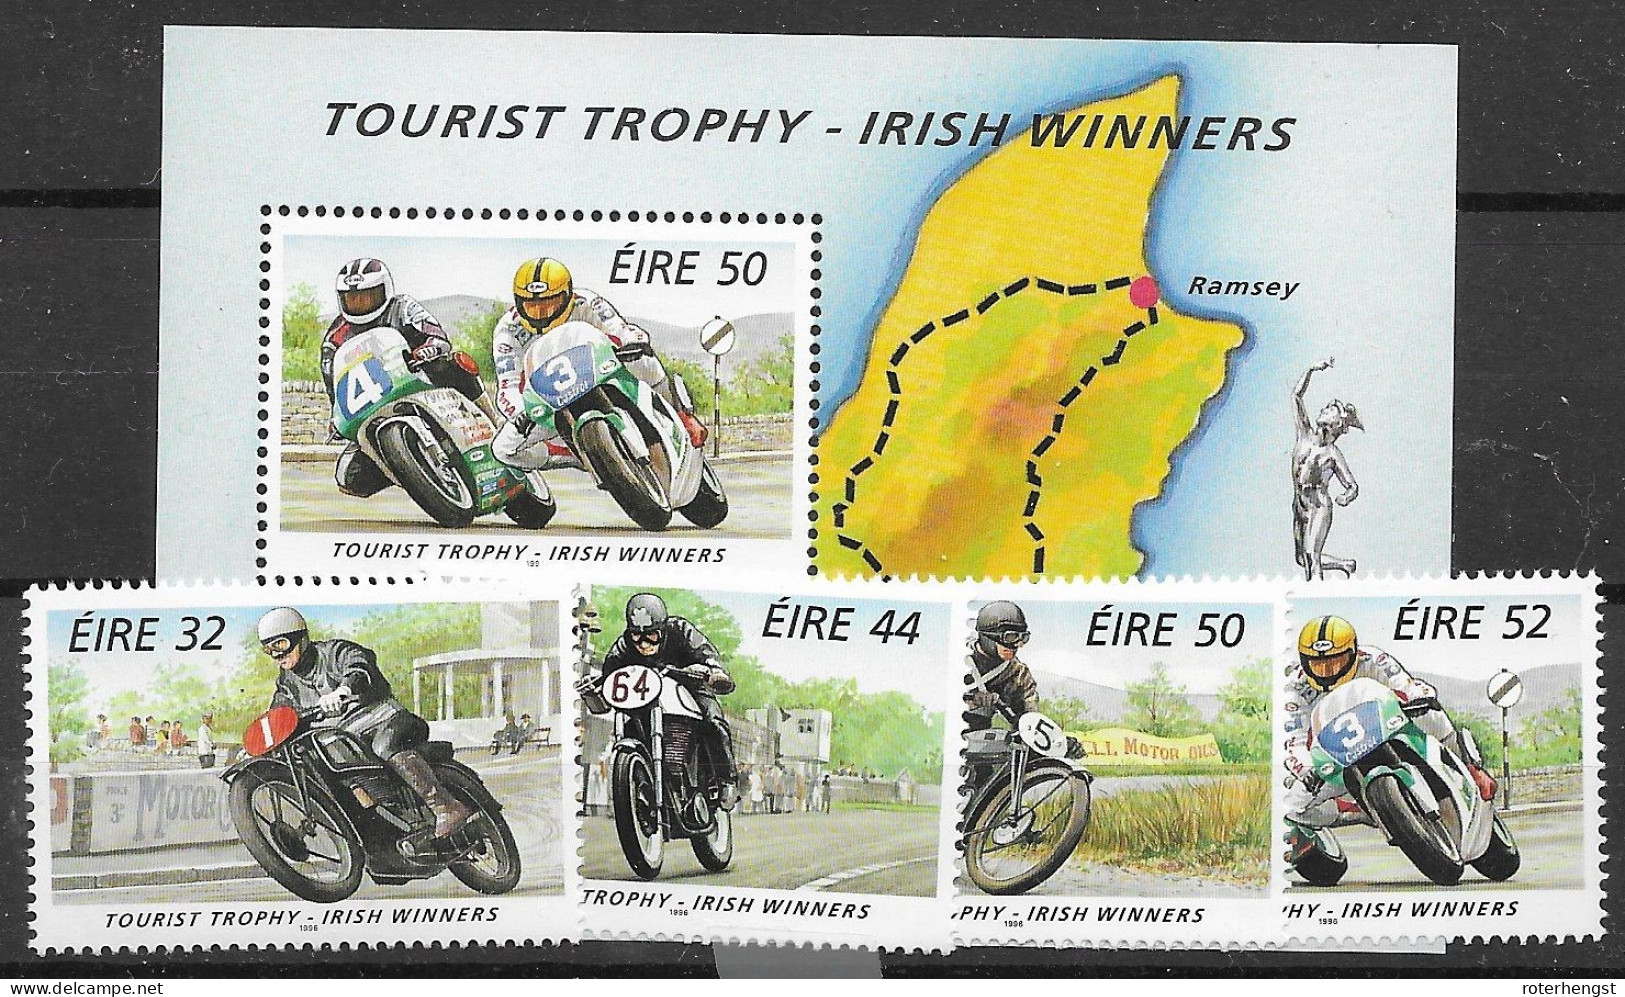 Ireland mnh ** 1996 (9 scans)  74 euros